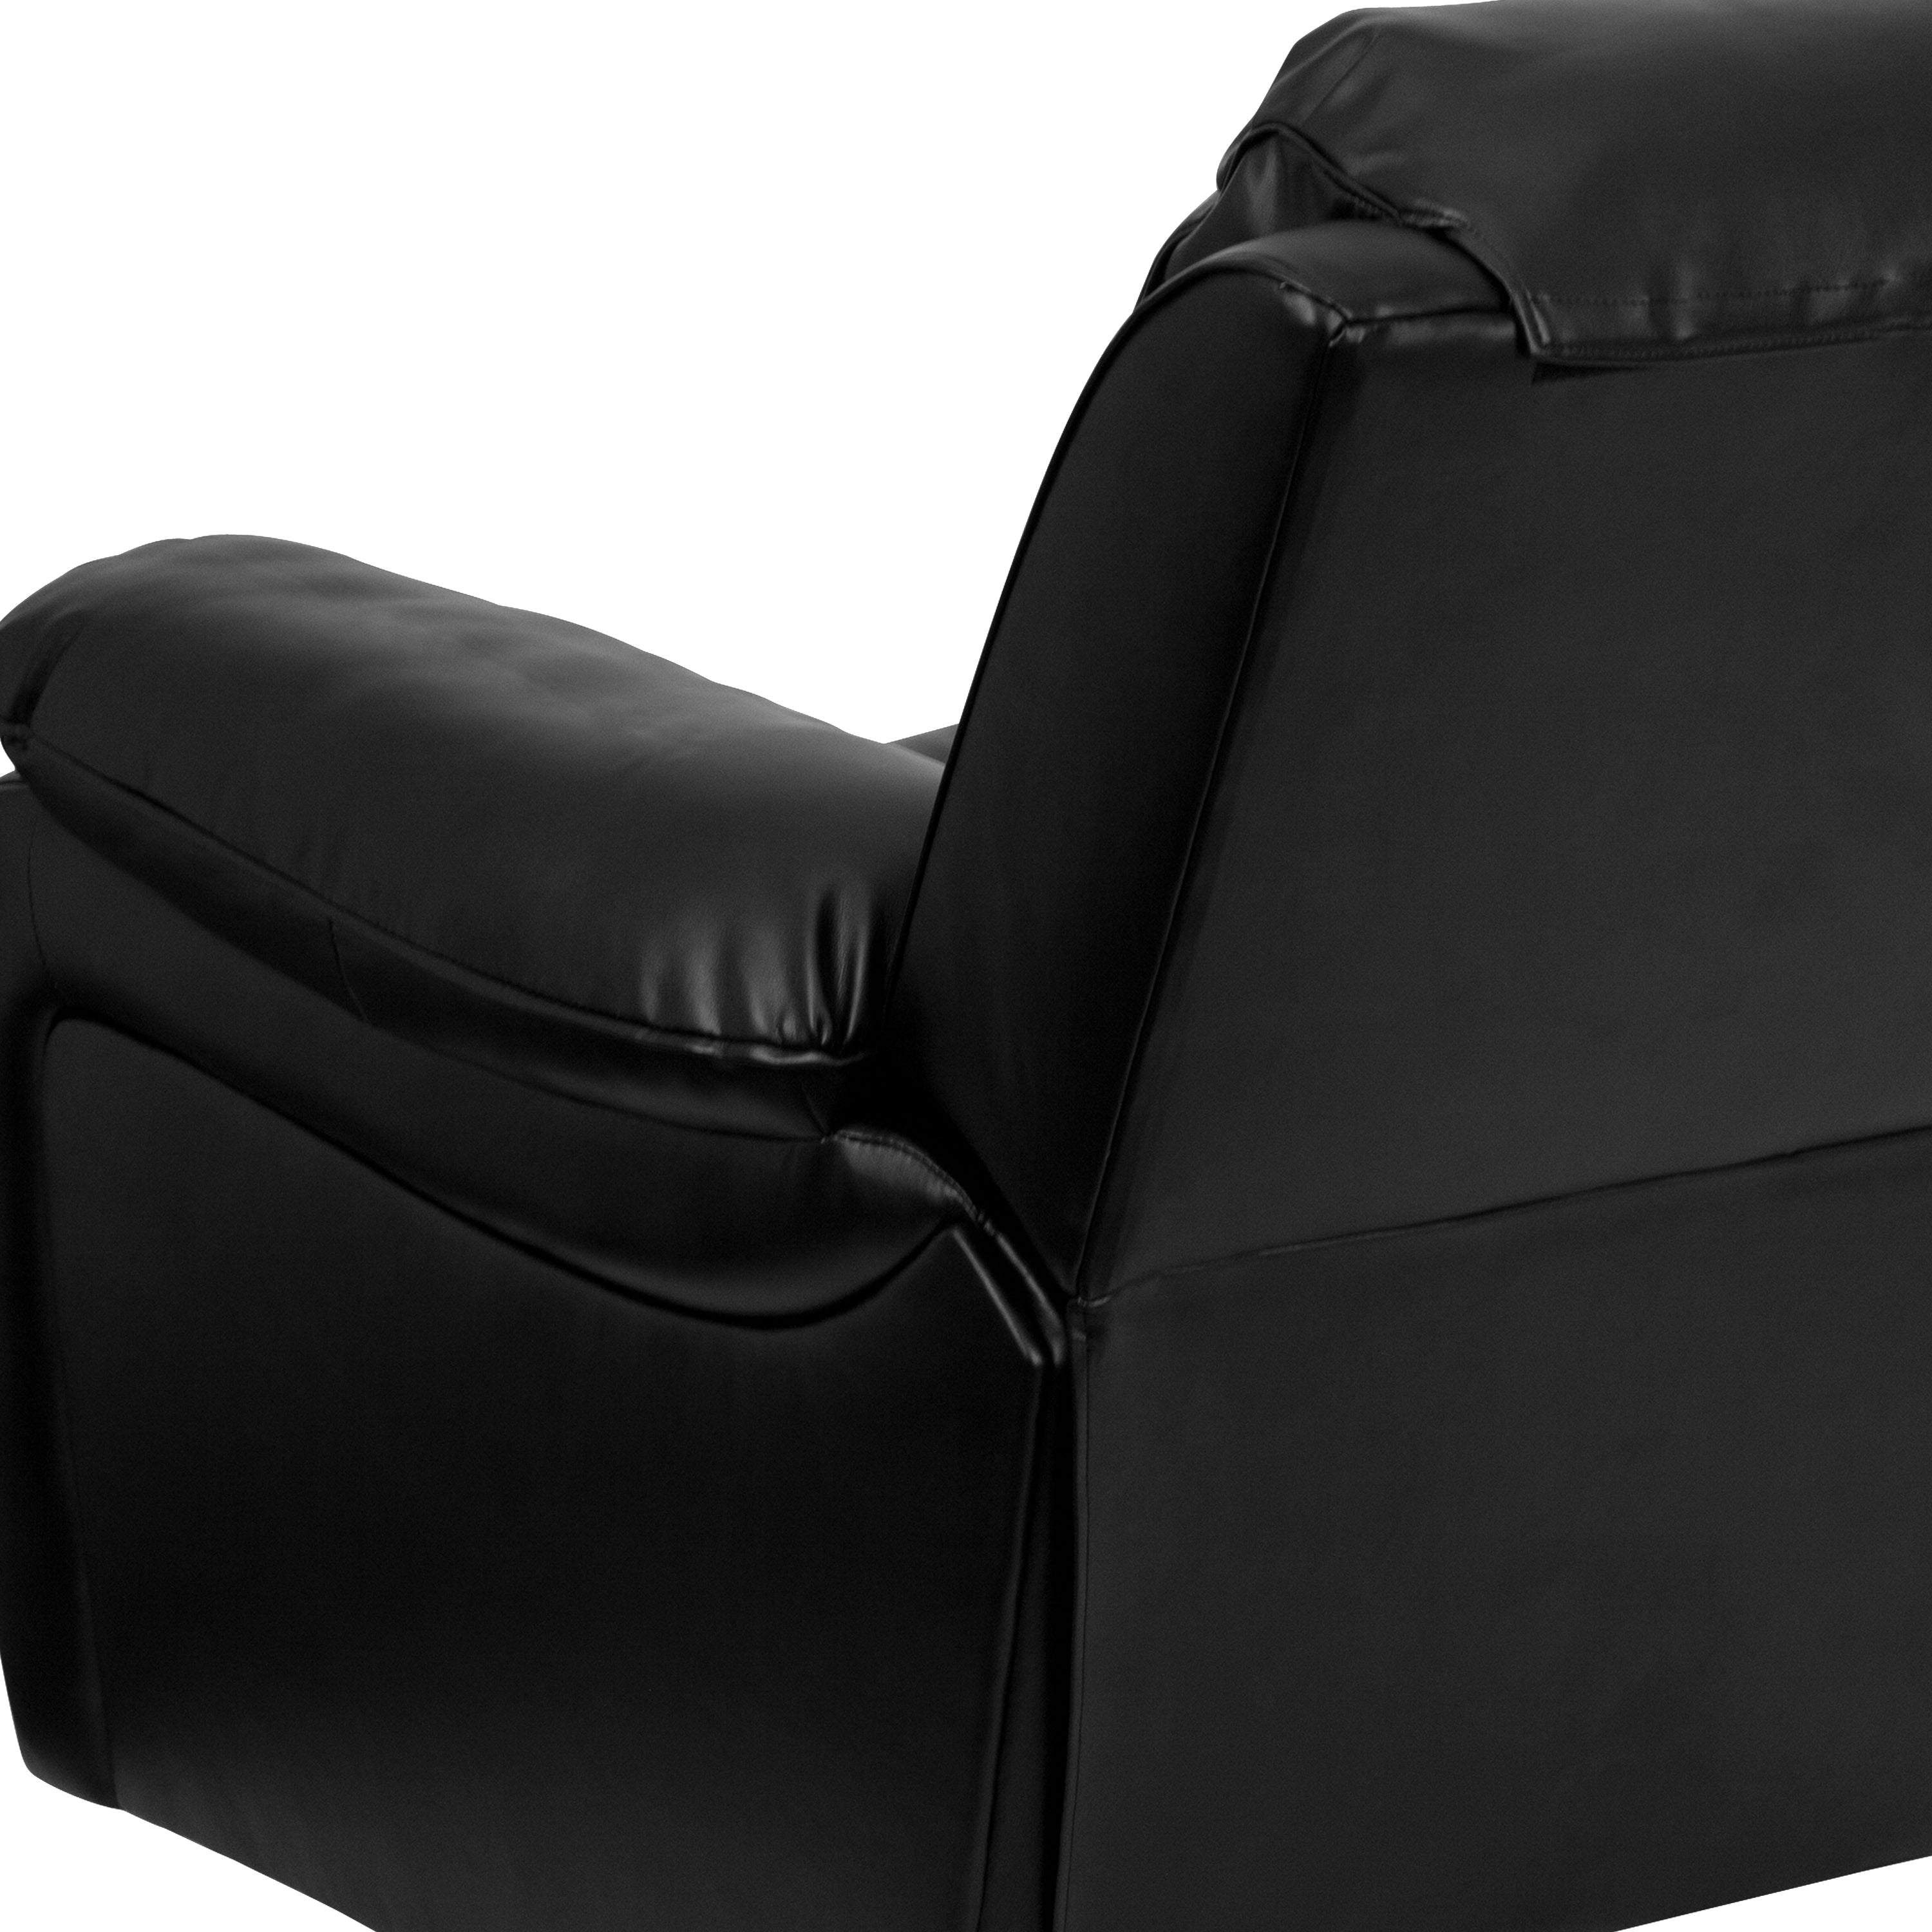 LeatherSoftSoft Rocker Recliner-Recliner-Flash Furniture-Wall2Wall Furnishings